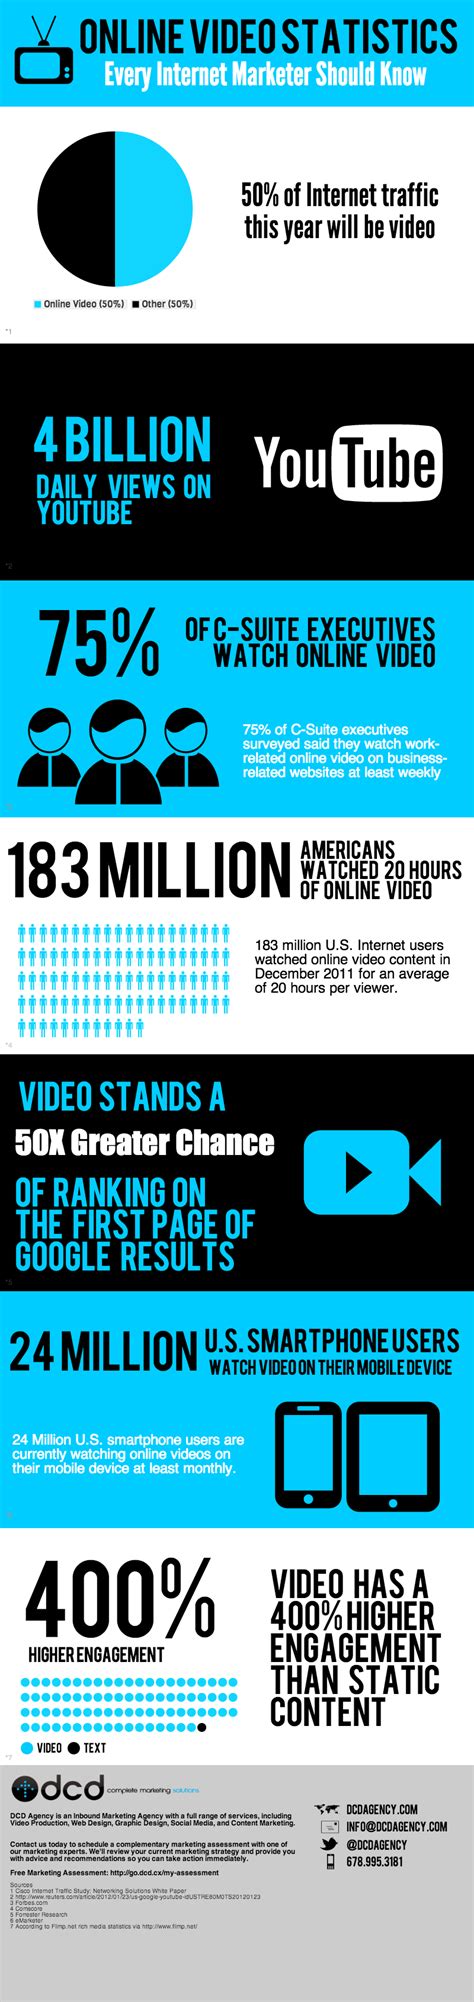 video statistics   marketer   infographic